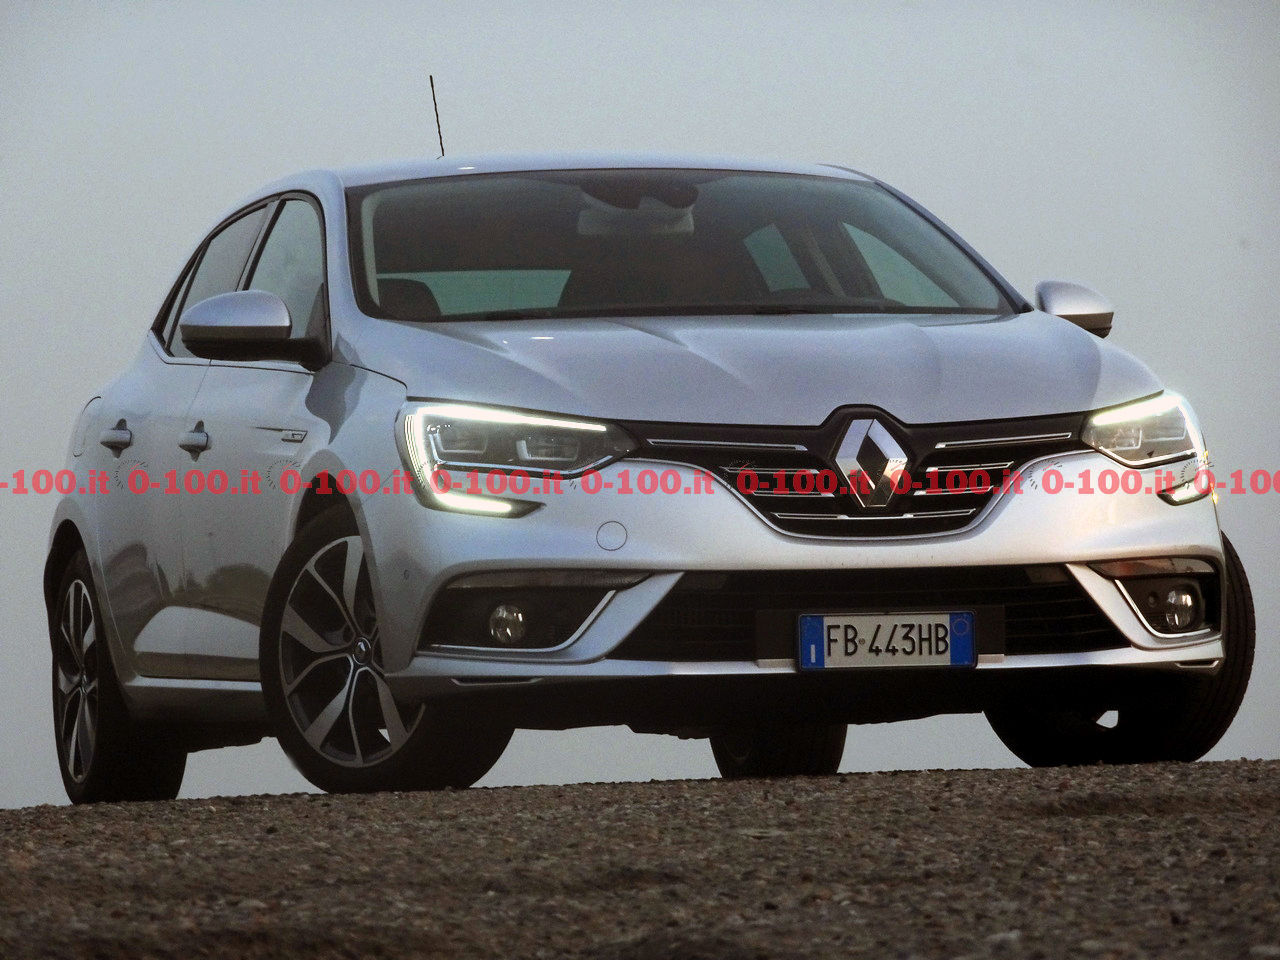 Renault-Megane-GT-Bose-dCi-130-test-prova-opinioni_0-100_2